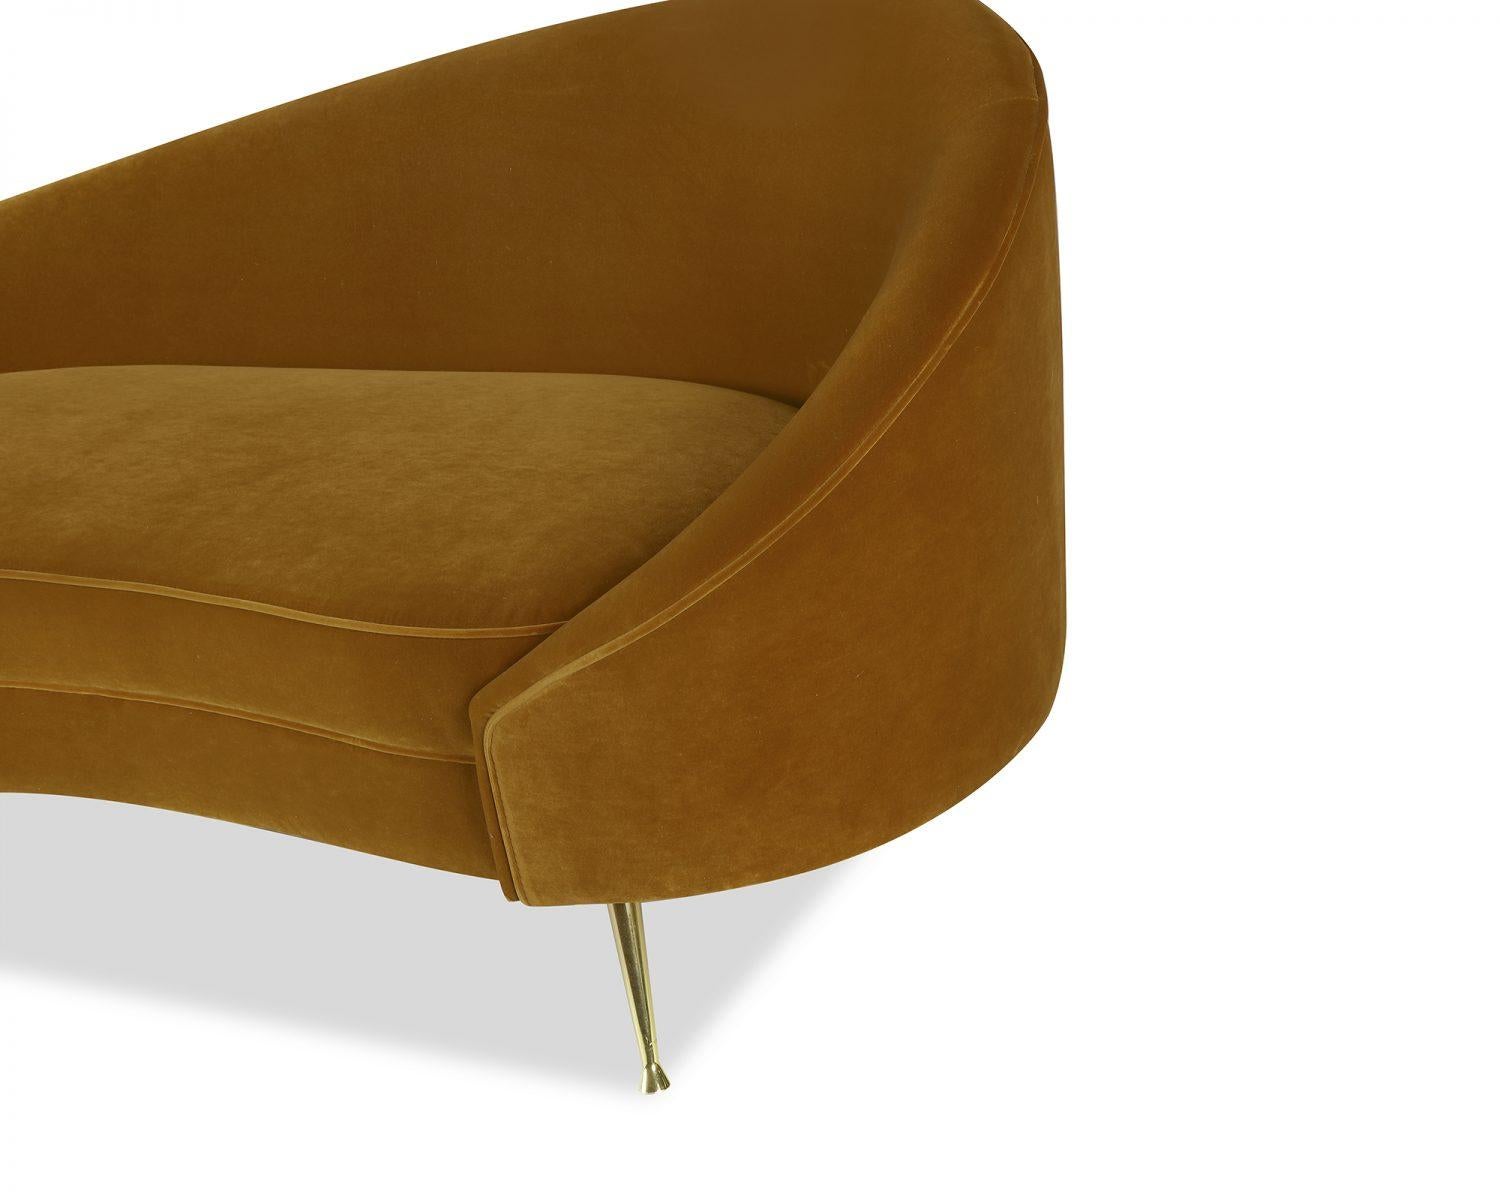 Amber velvet and brass sofa
Materials: Gainsborough Amber velvet polished brass legs
Dimensions: W 168 x D 77 x H 76 cm.
 